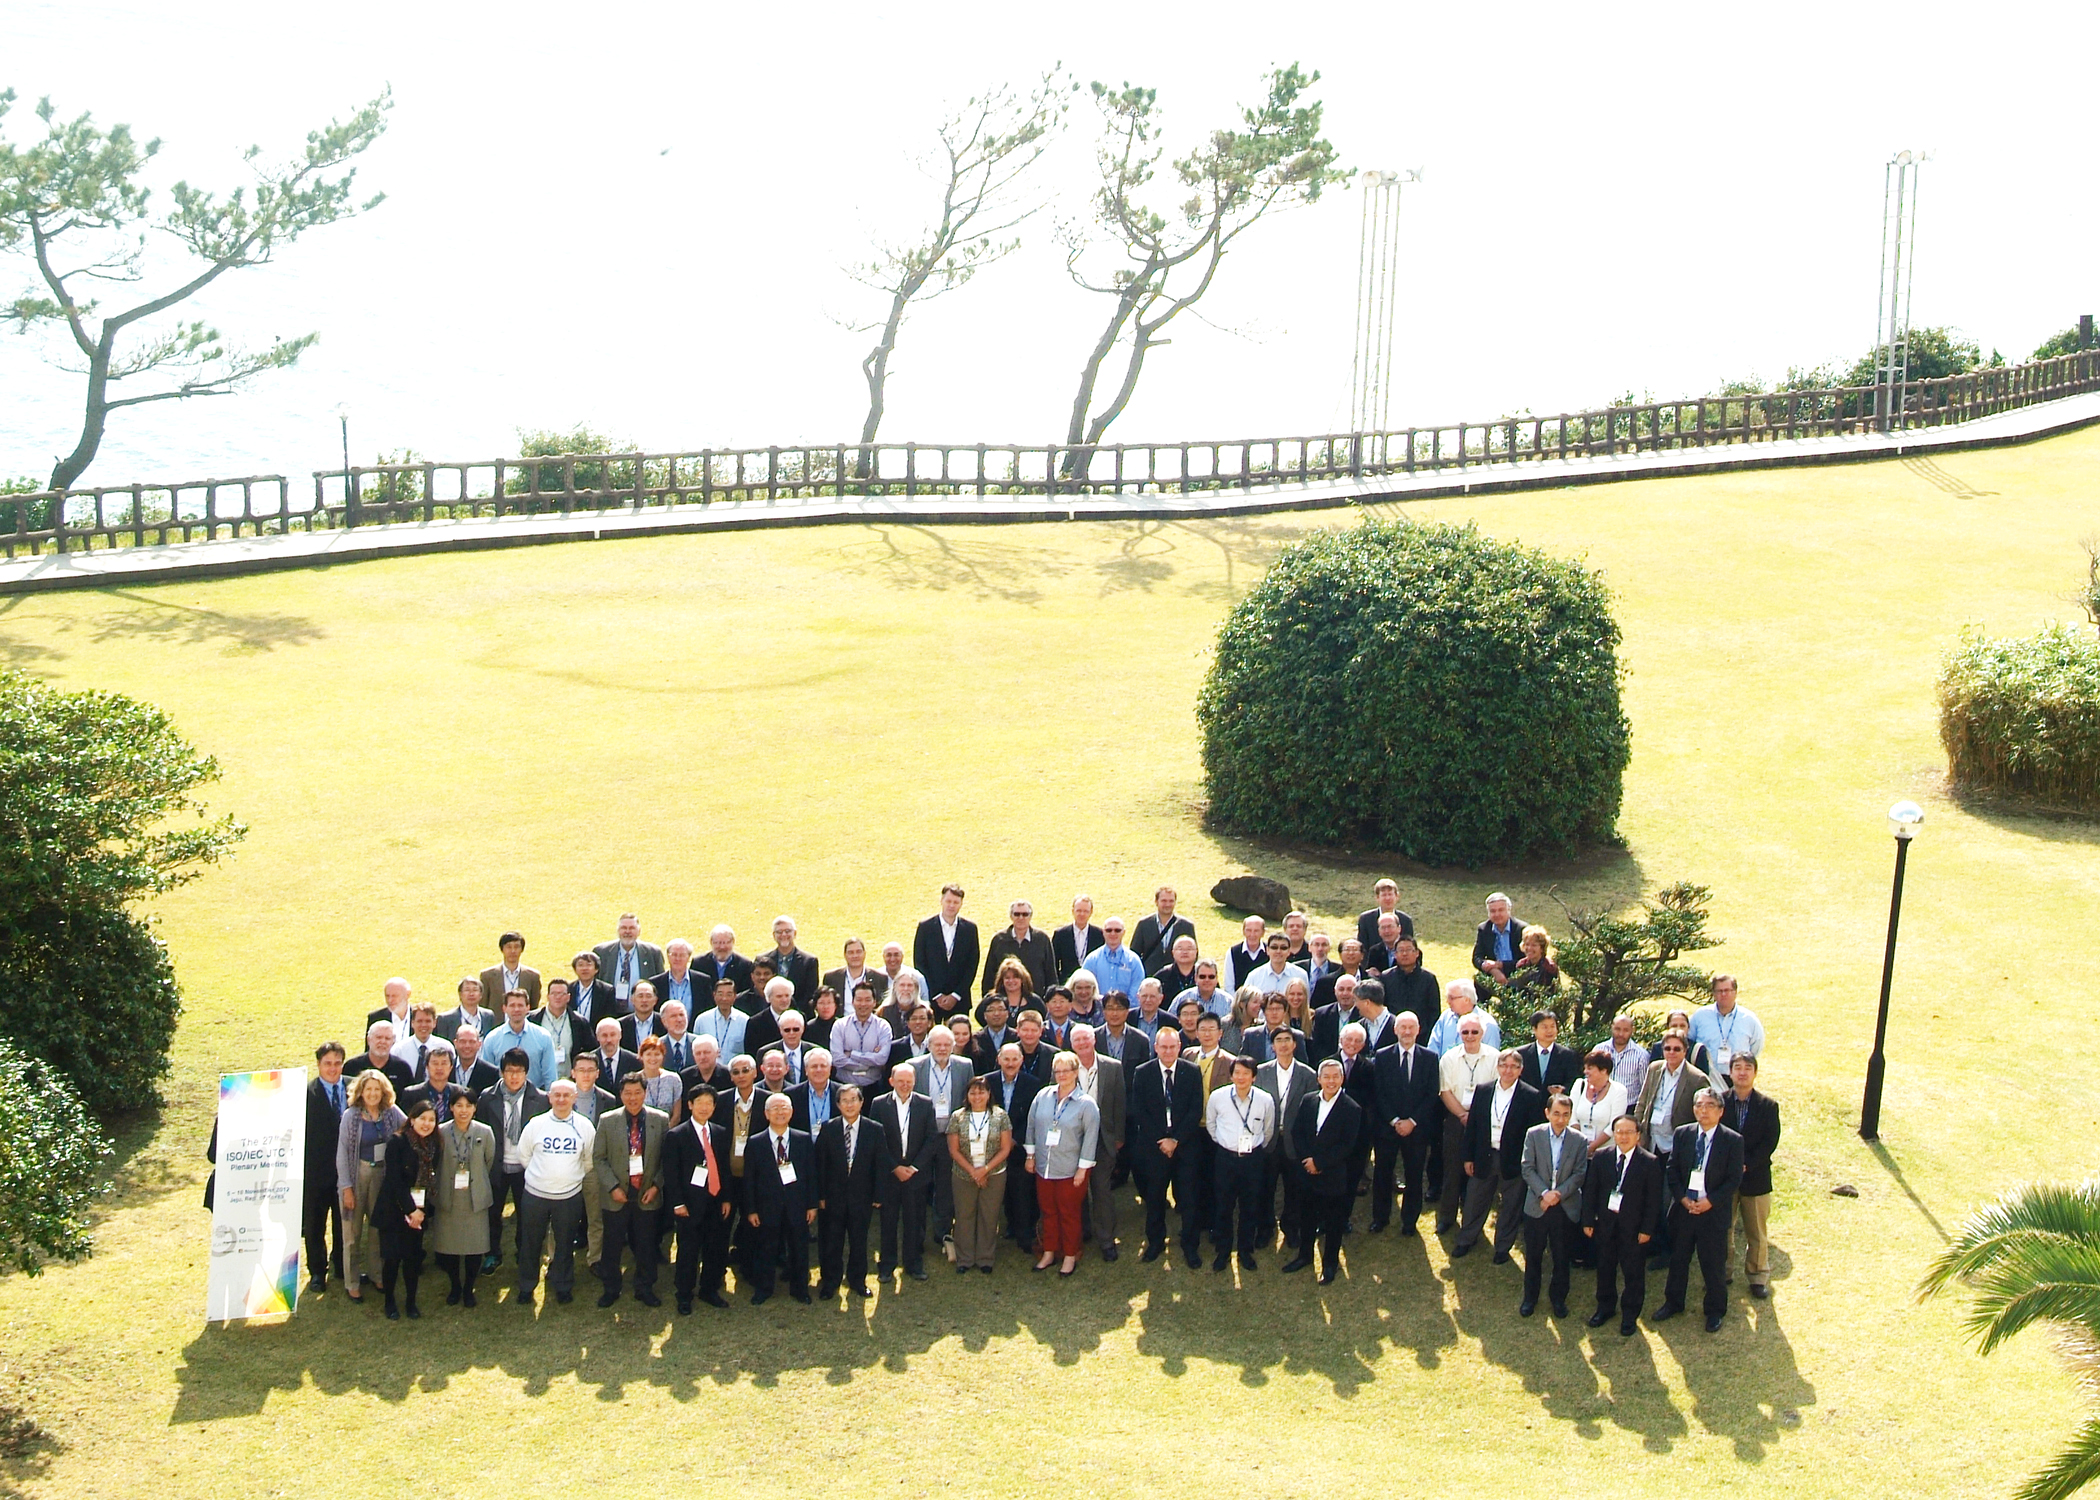 The 27th ISO/IEC JTC1 Plenary Meeting